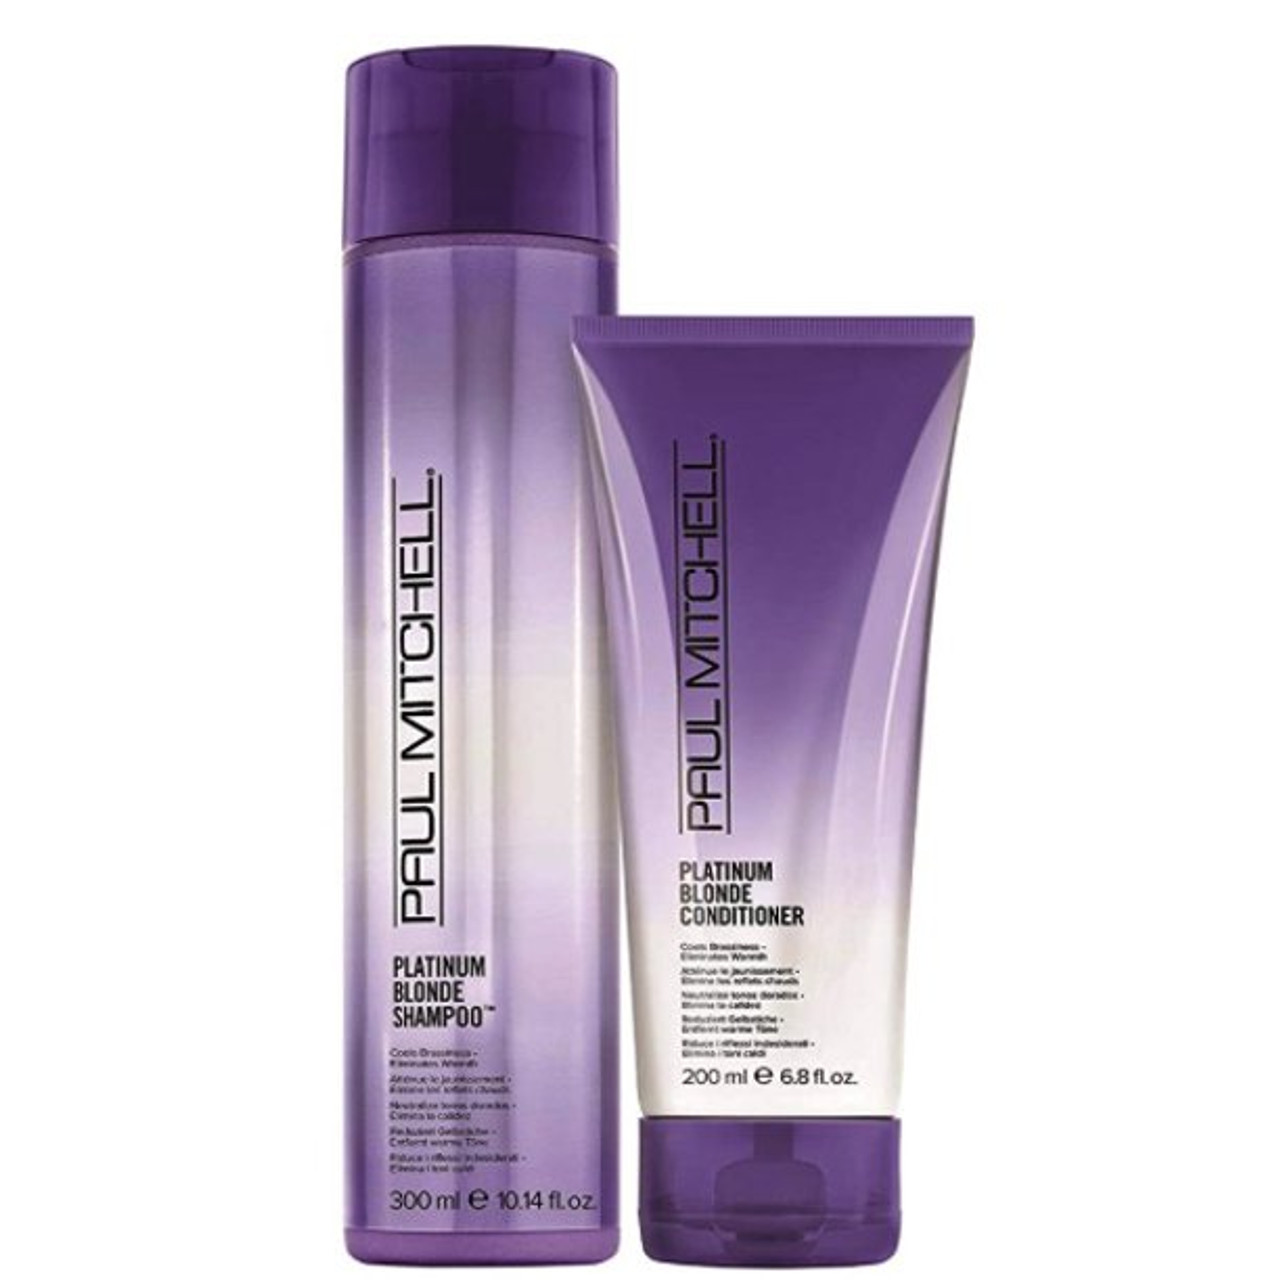 Paul Mitchell Platinum Purple Shampoo 10.14 & 6.8 oz, Duo Set